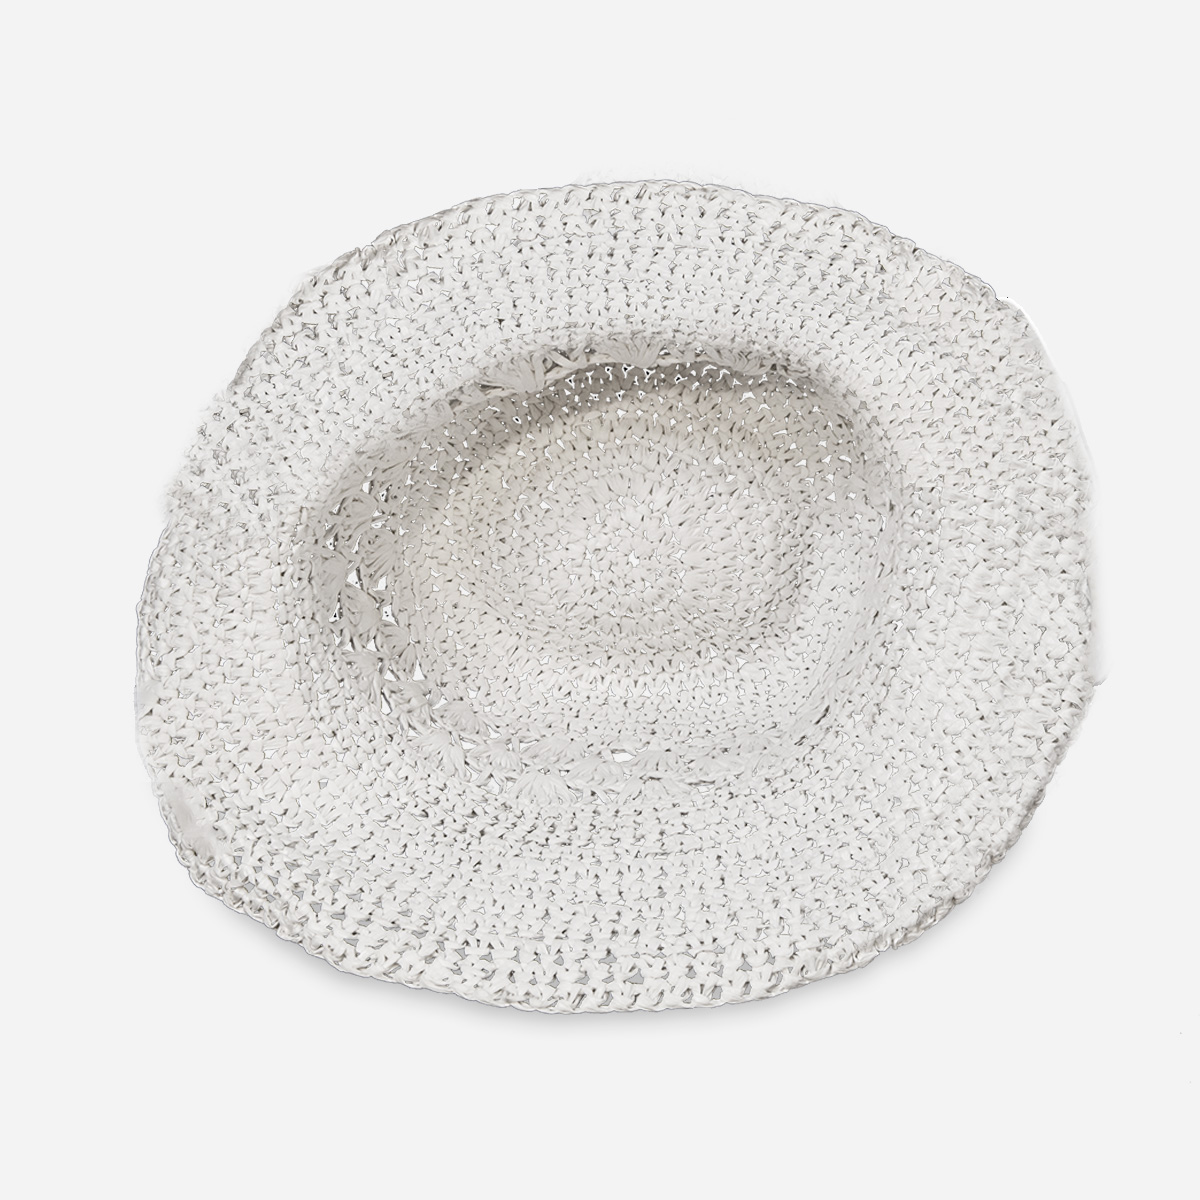 Inside white straw hat